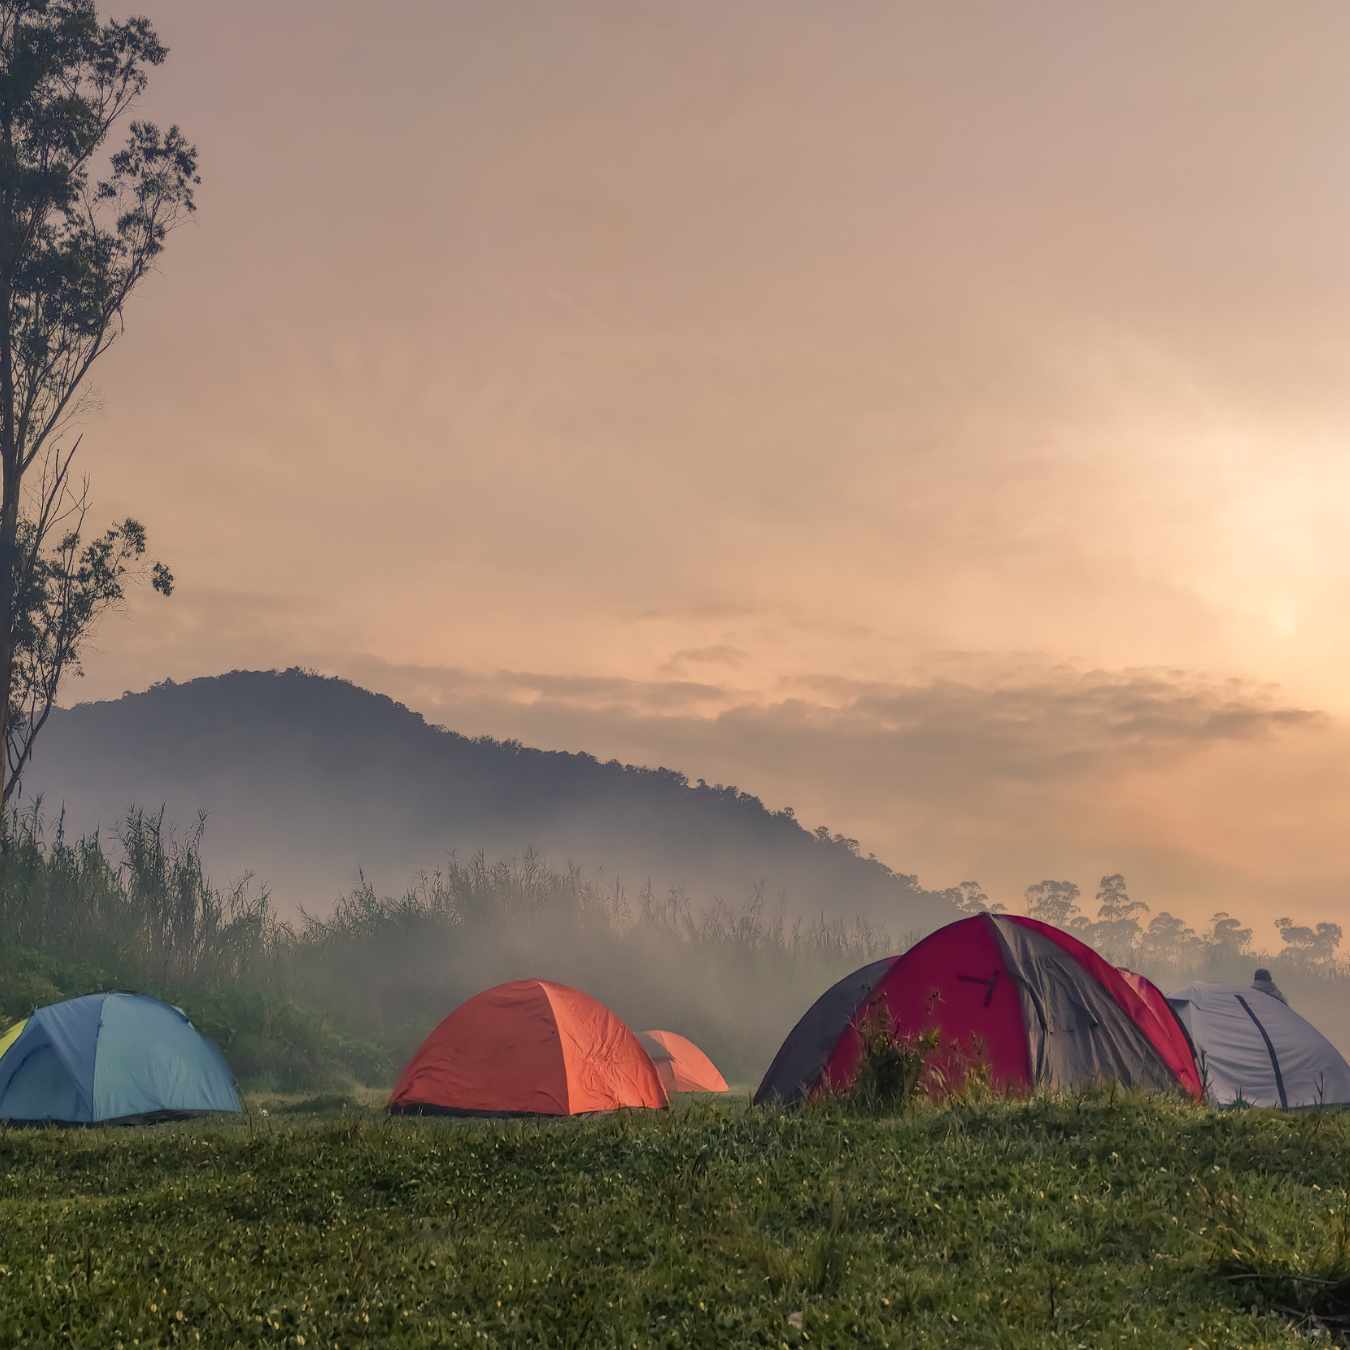 Campsite tents with mountain landscape